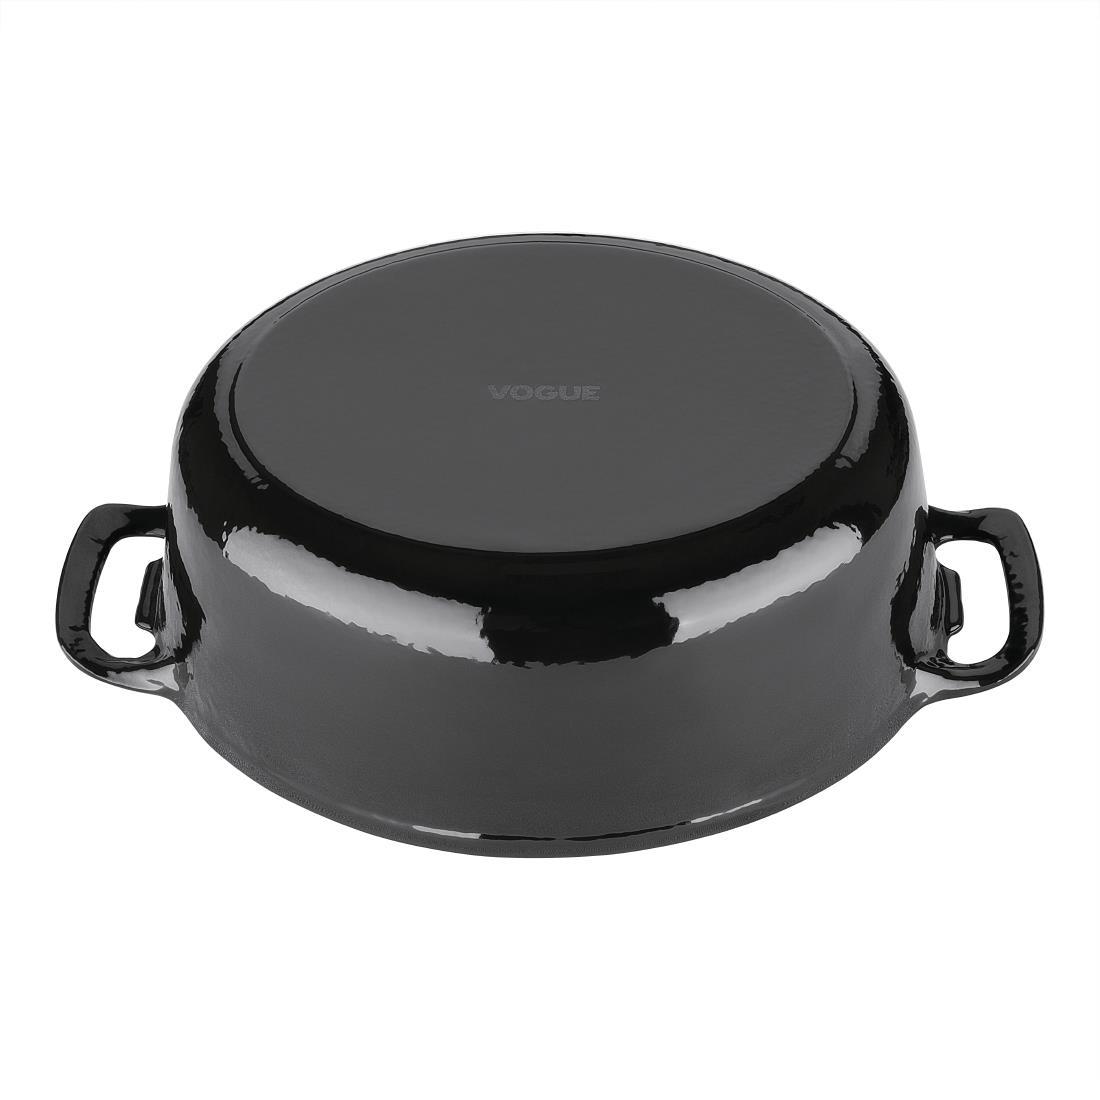 Vogue Black Oval Casserole Dish 5Ltr - GH306  - 6